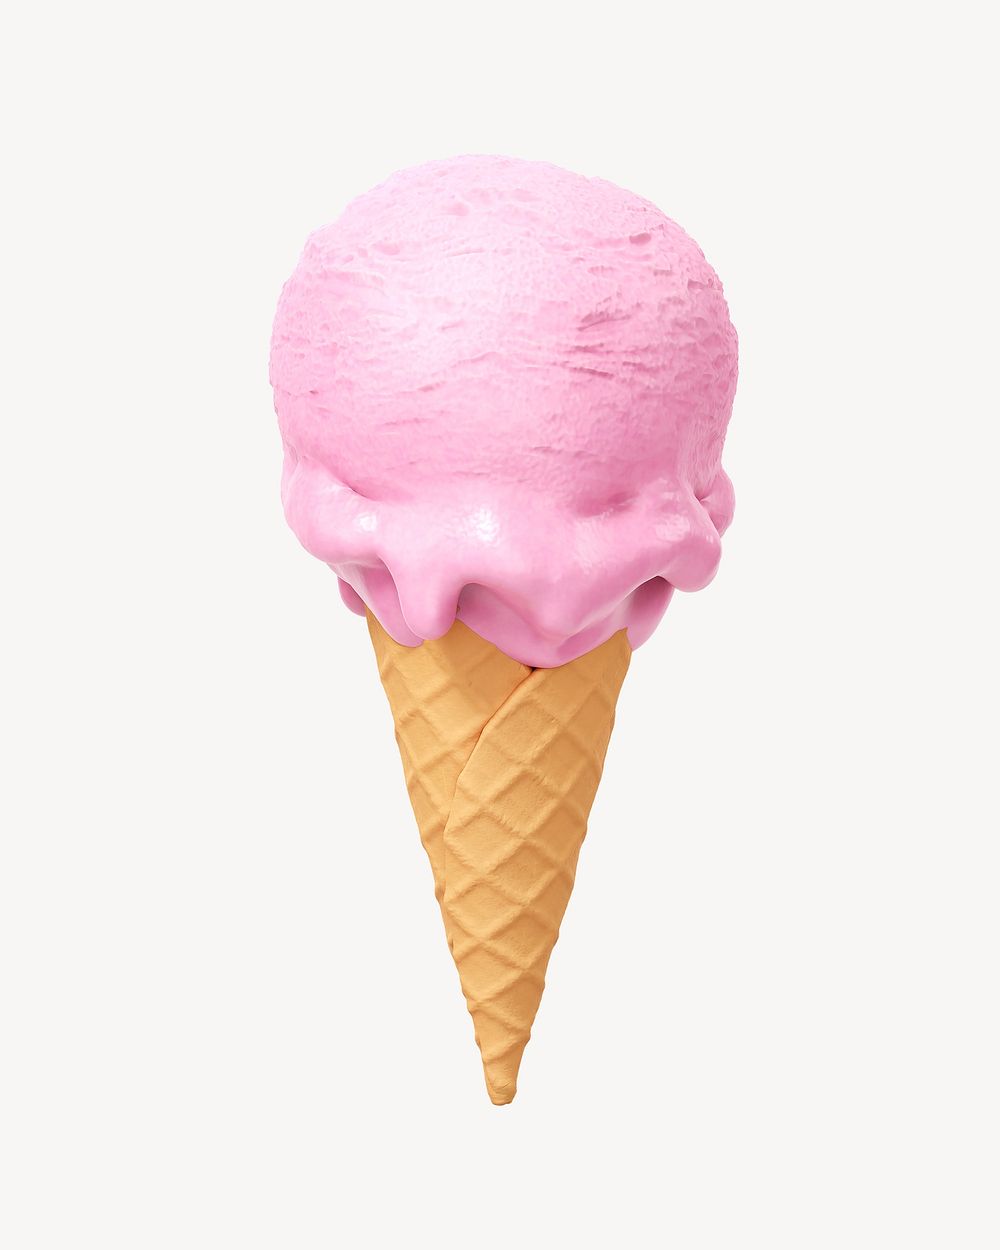 3D strawberry ice-cream cone, element illustration